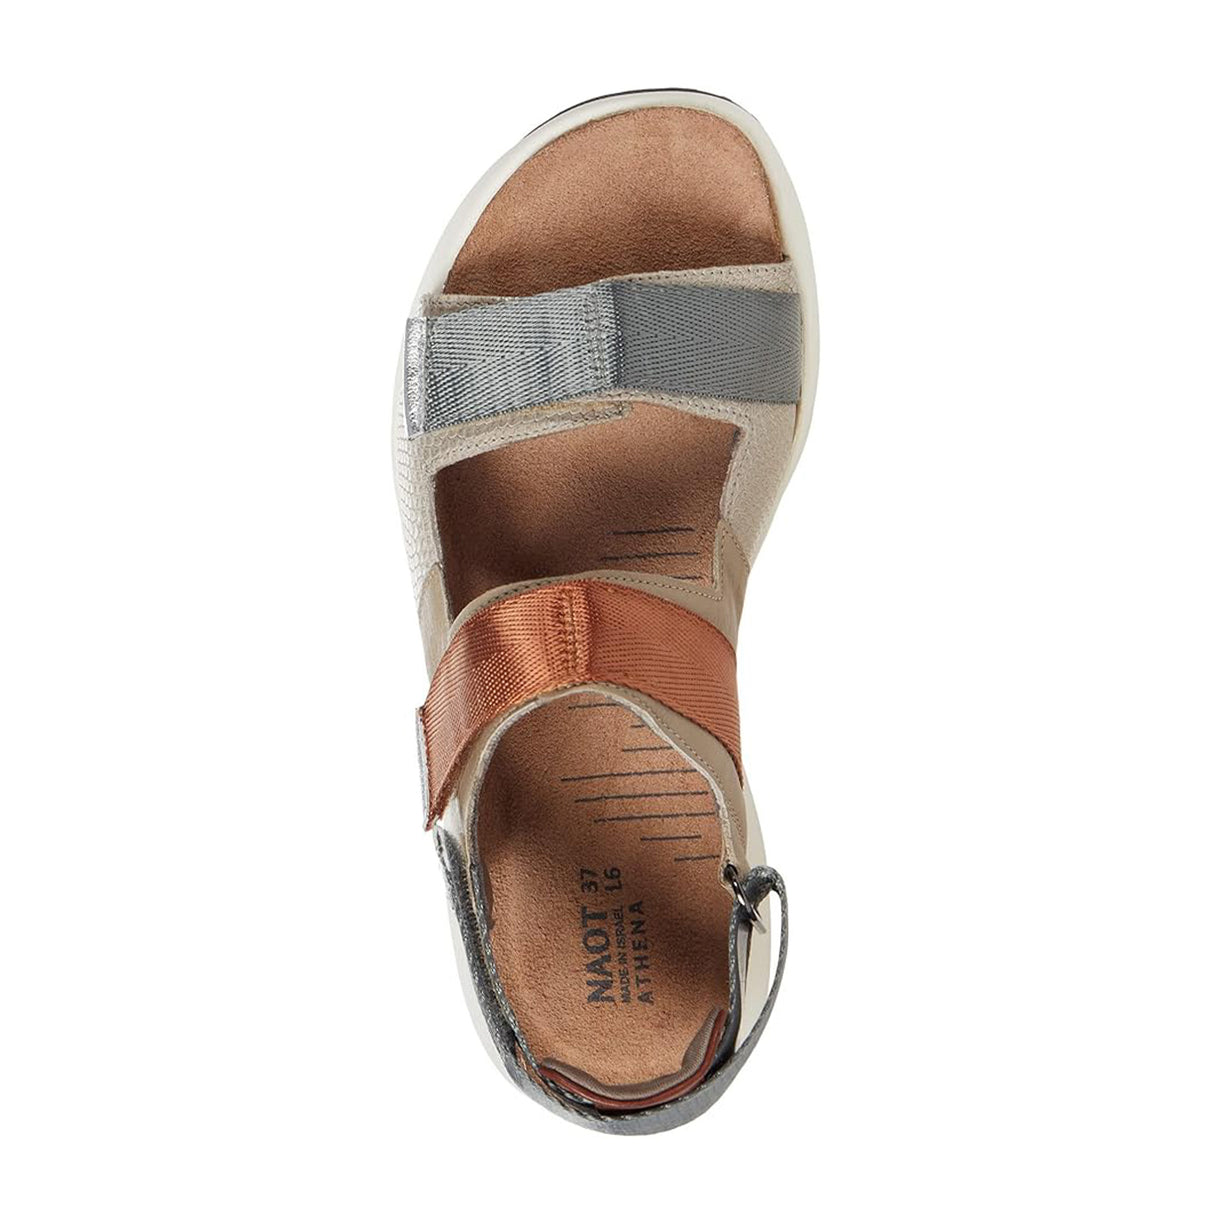 Naot Odyssey Active Sandal (Women) - Beige Lizard/Soft Beige/Soft Chestnut/Soft Silver Sandals - Backstrap - The Heel Shoe Fitters